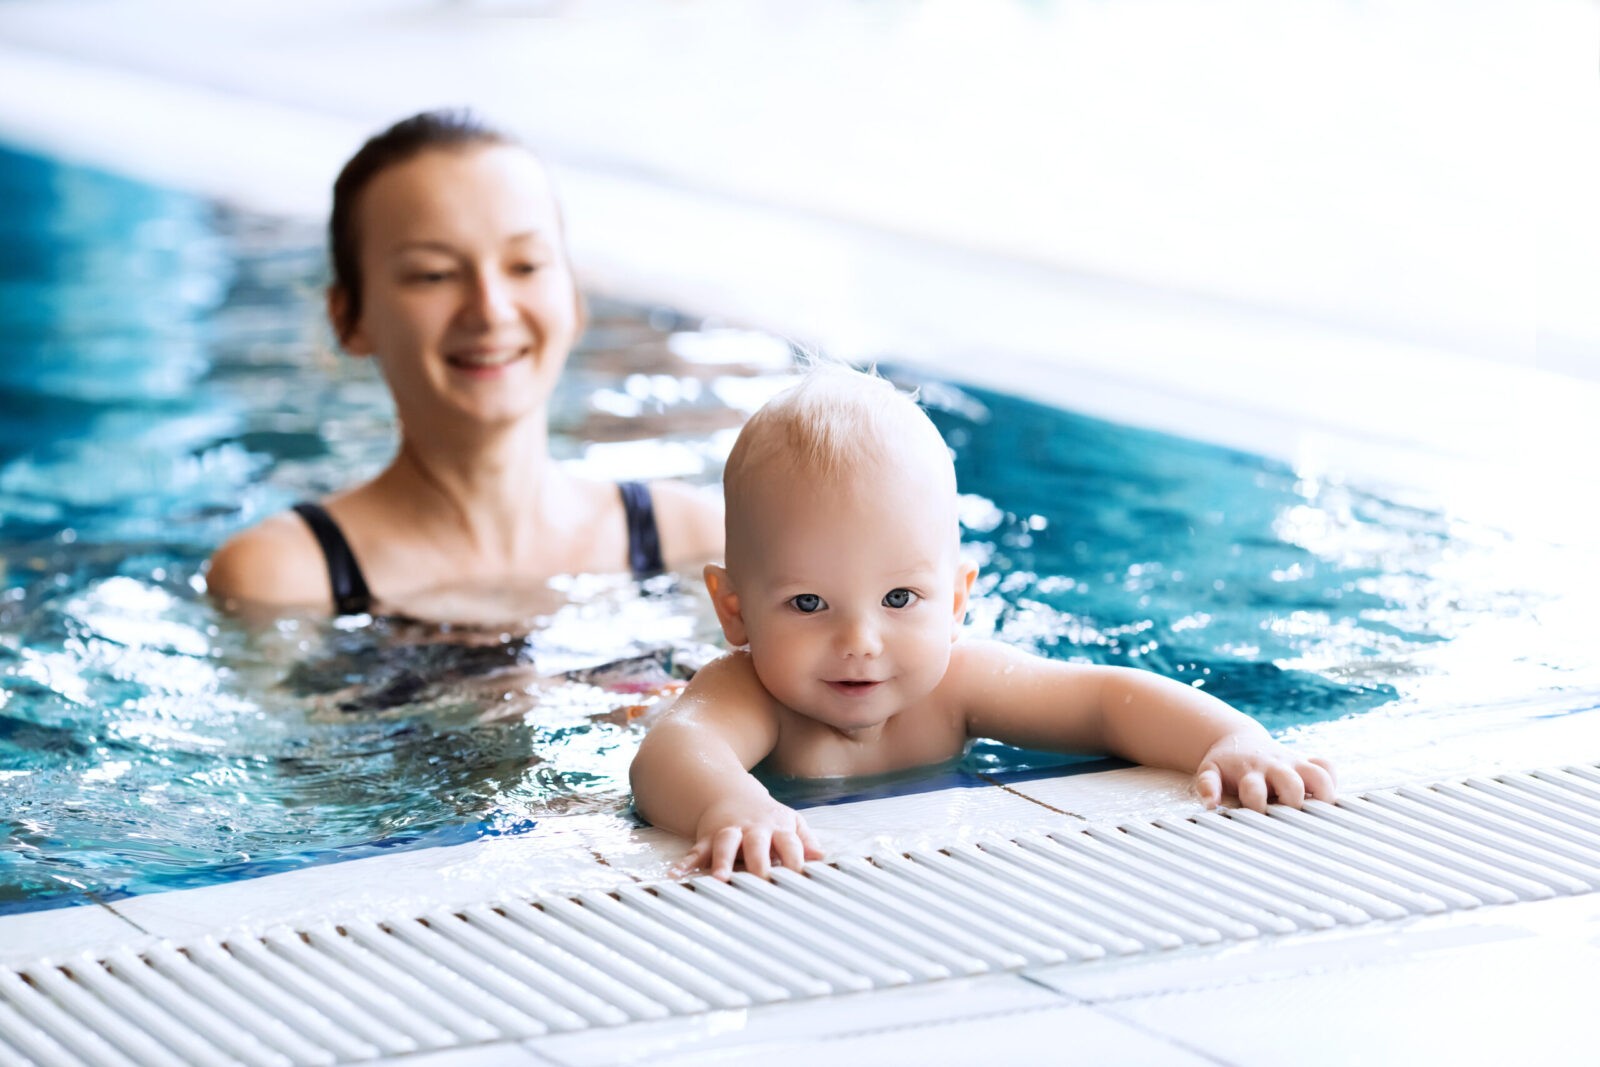 Clases de natación infantil en Onfitness